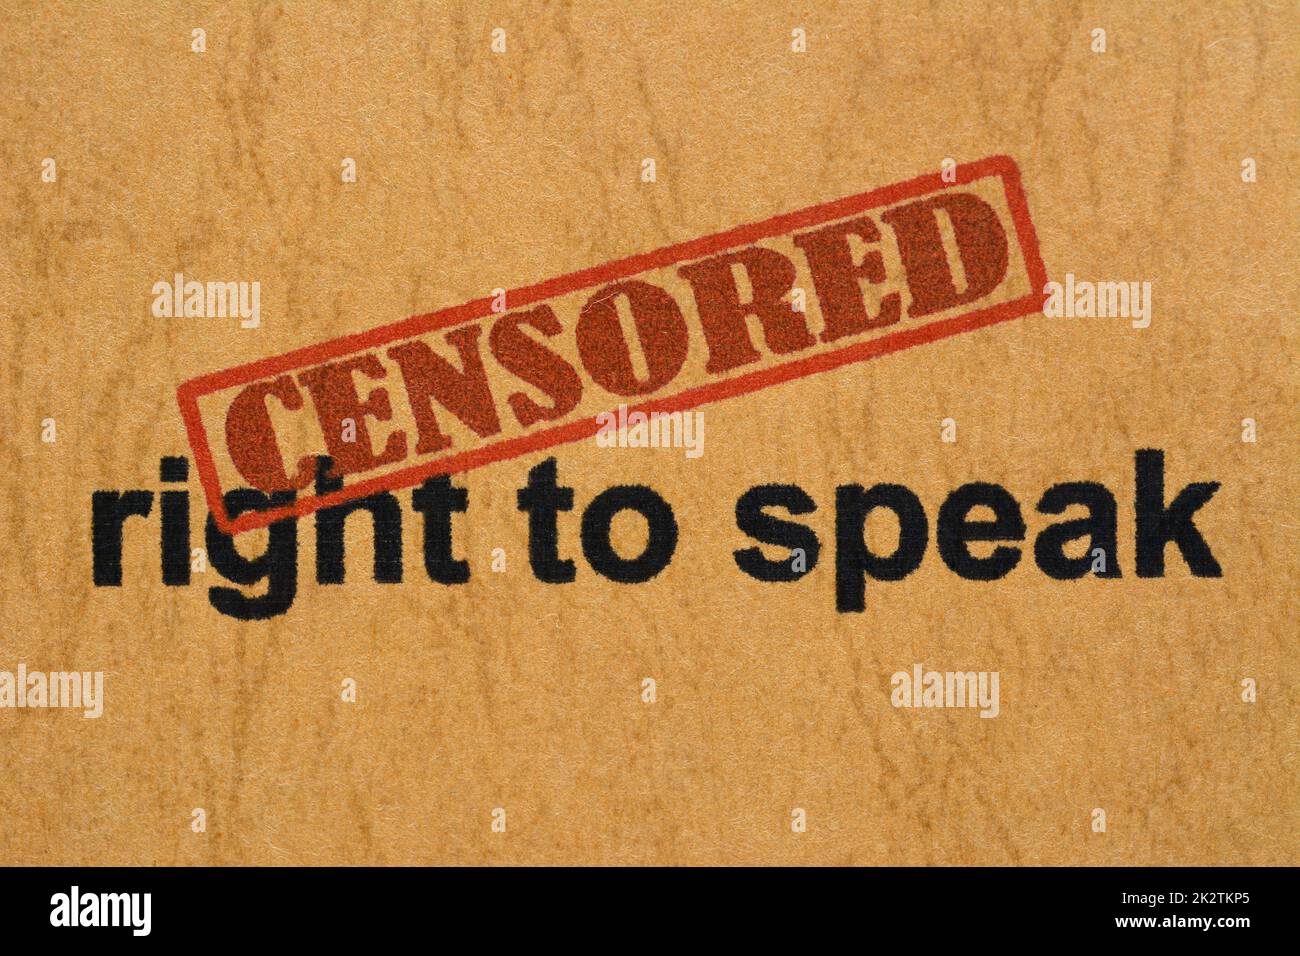 Censored right to speak Stock Photo